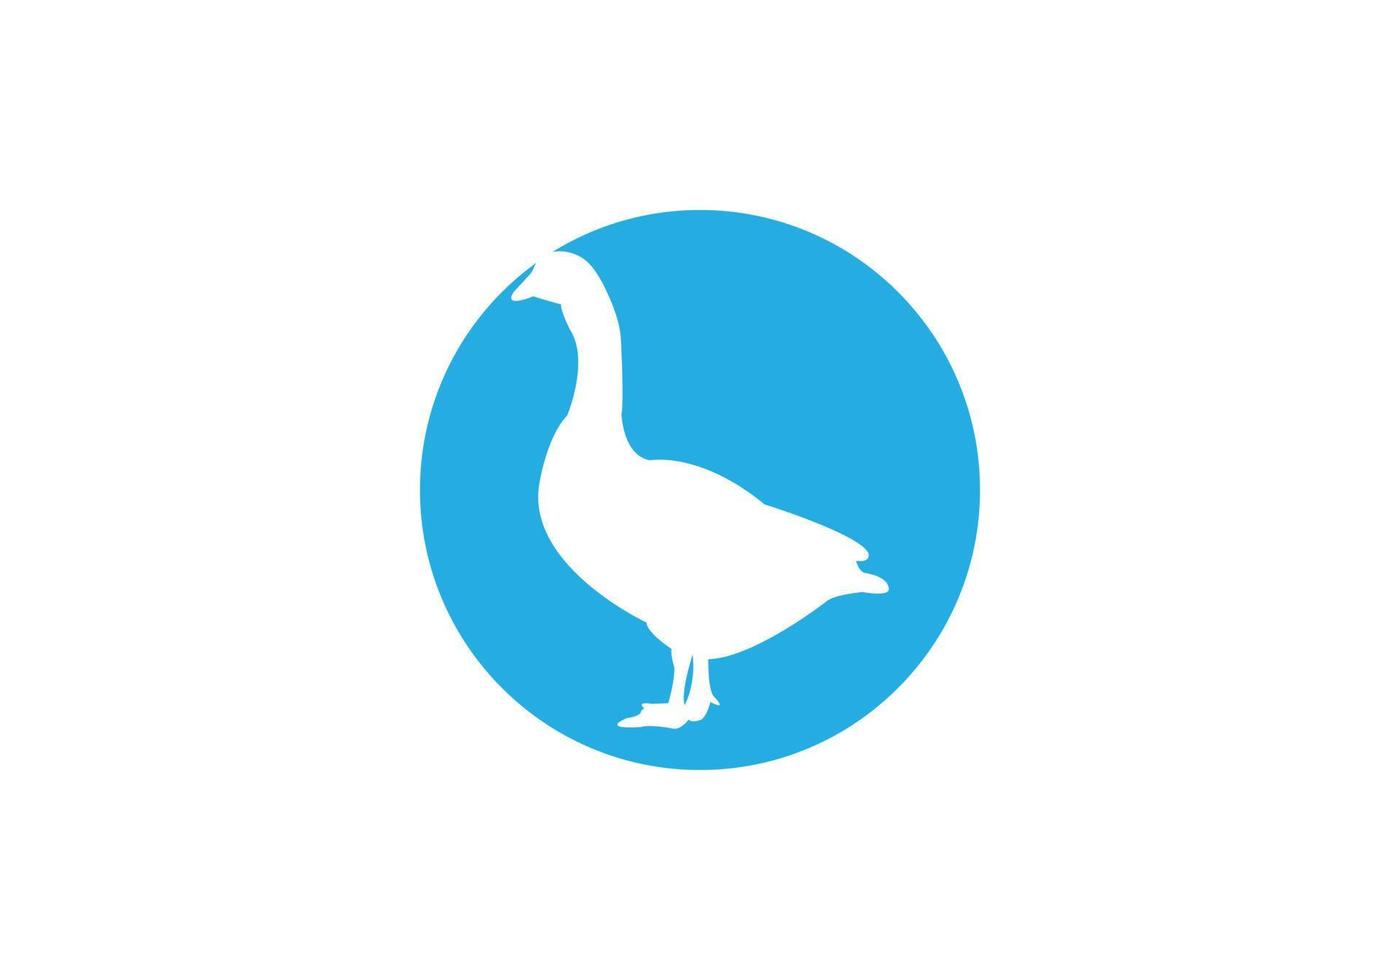 desenho de logotipo de pássaro vetor